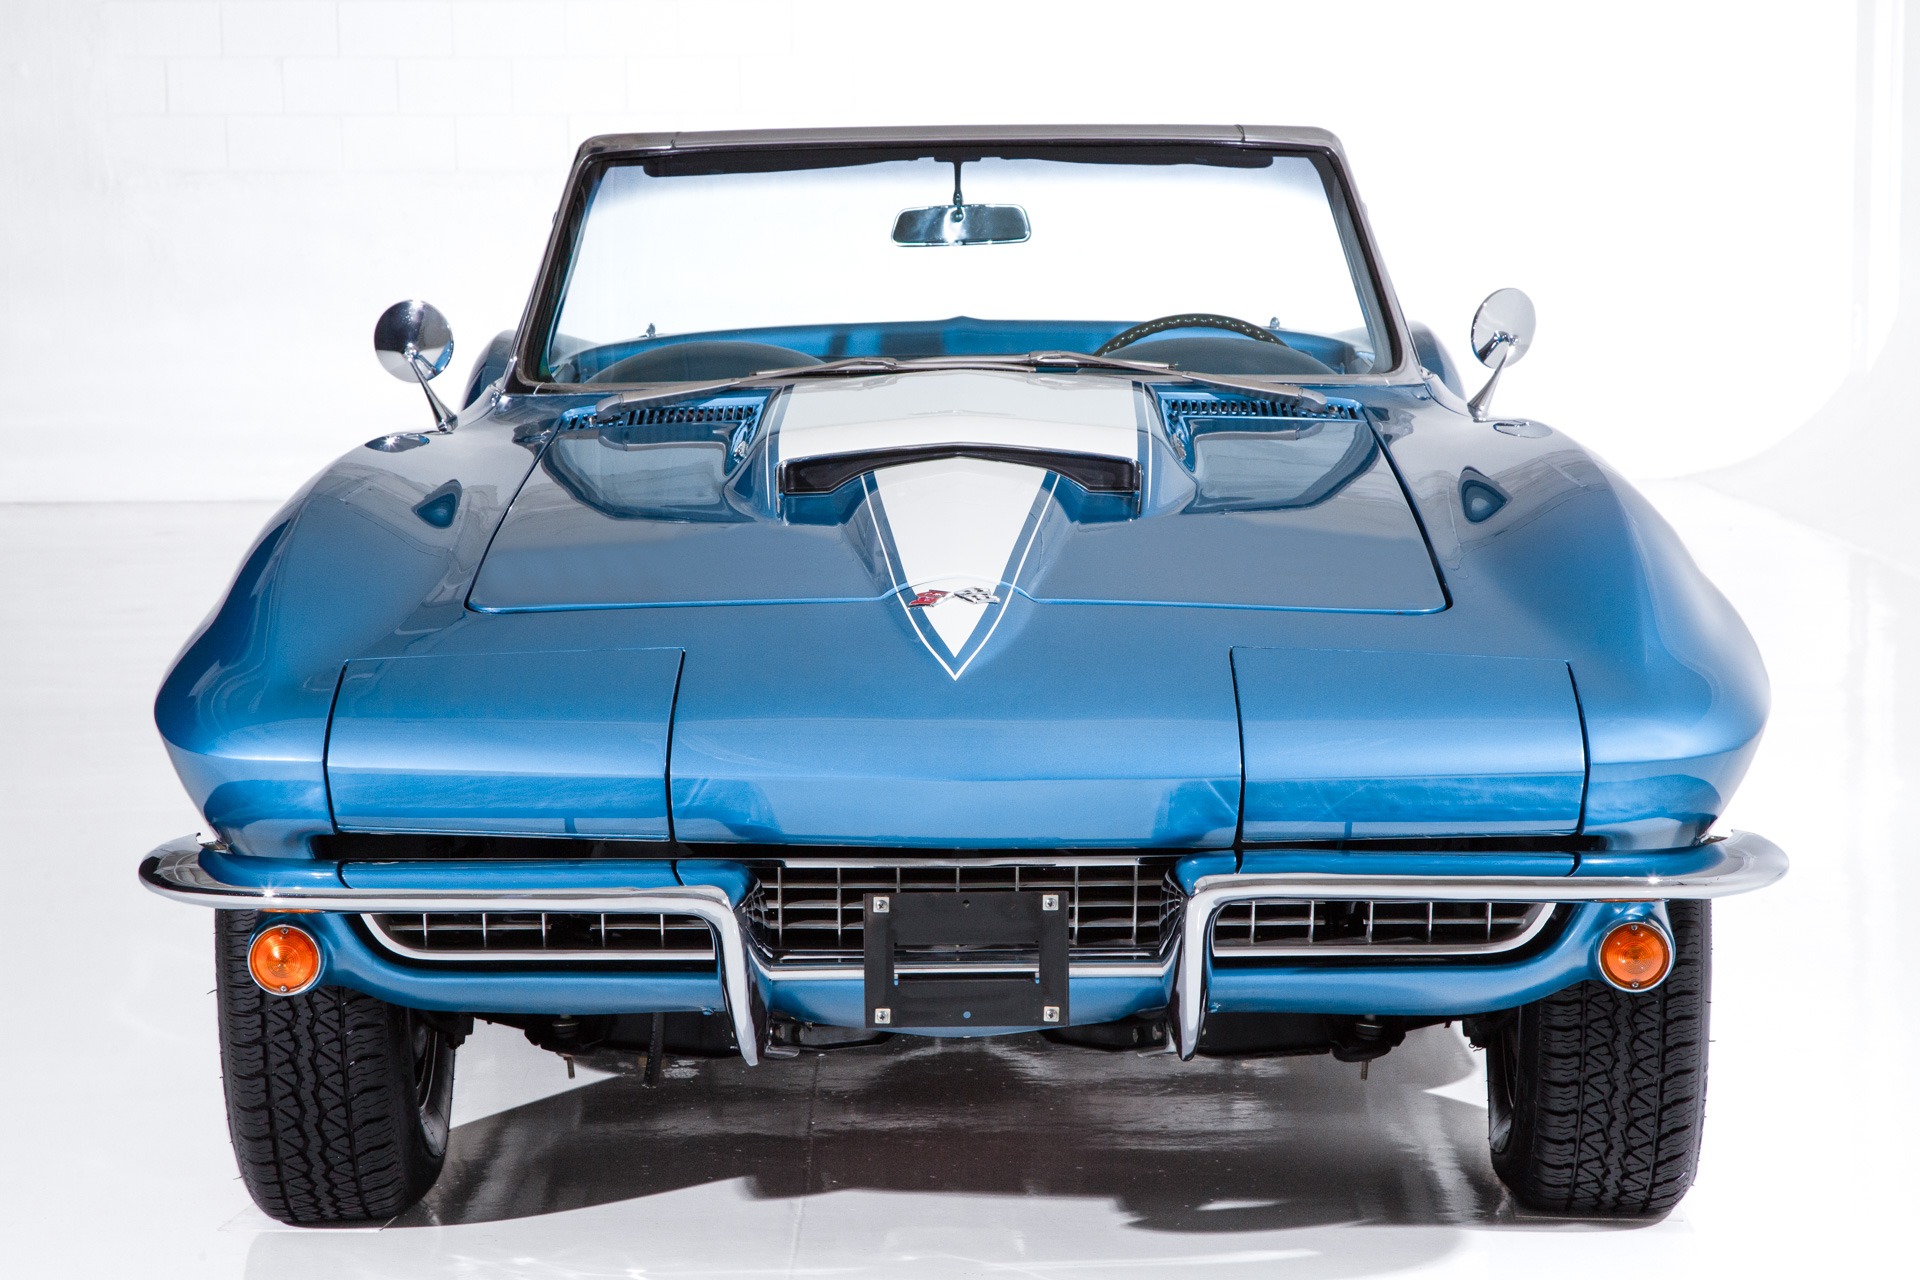 For Sale Used 1967 Chevrolet Corvette L71  427/435hp Tri-Power | American Dream Machines Des Moines IA 50309